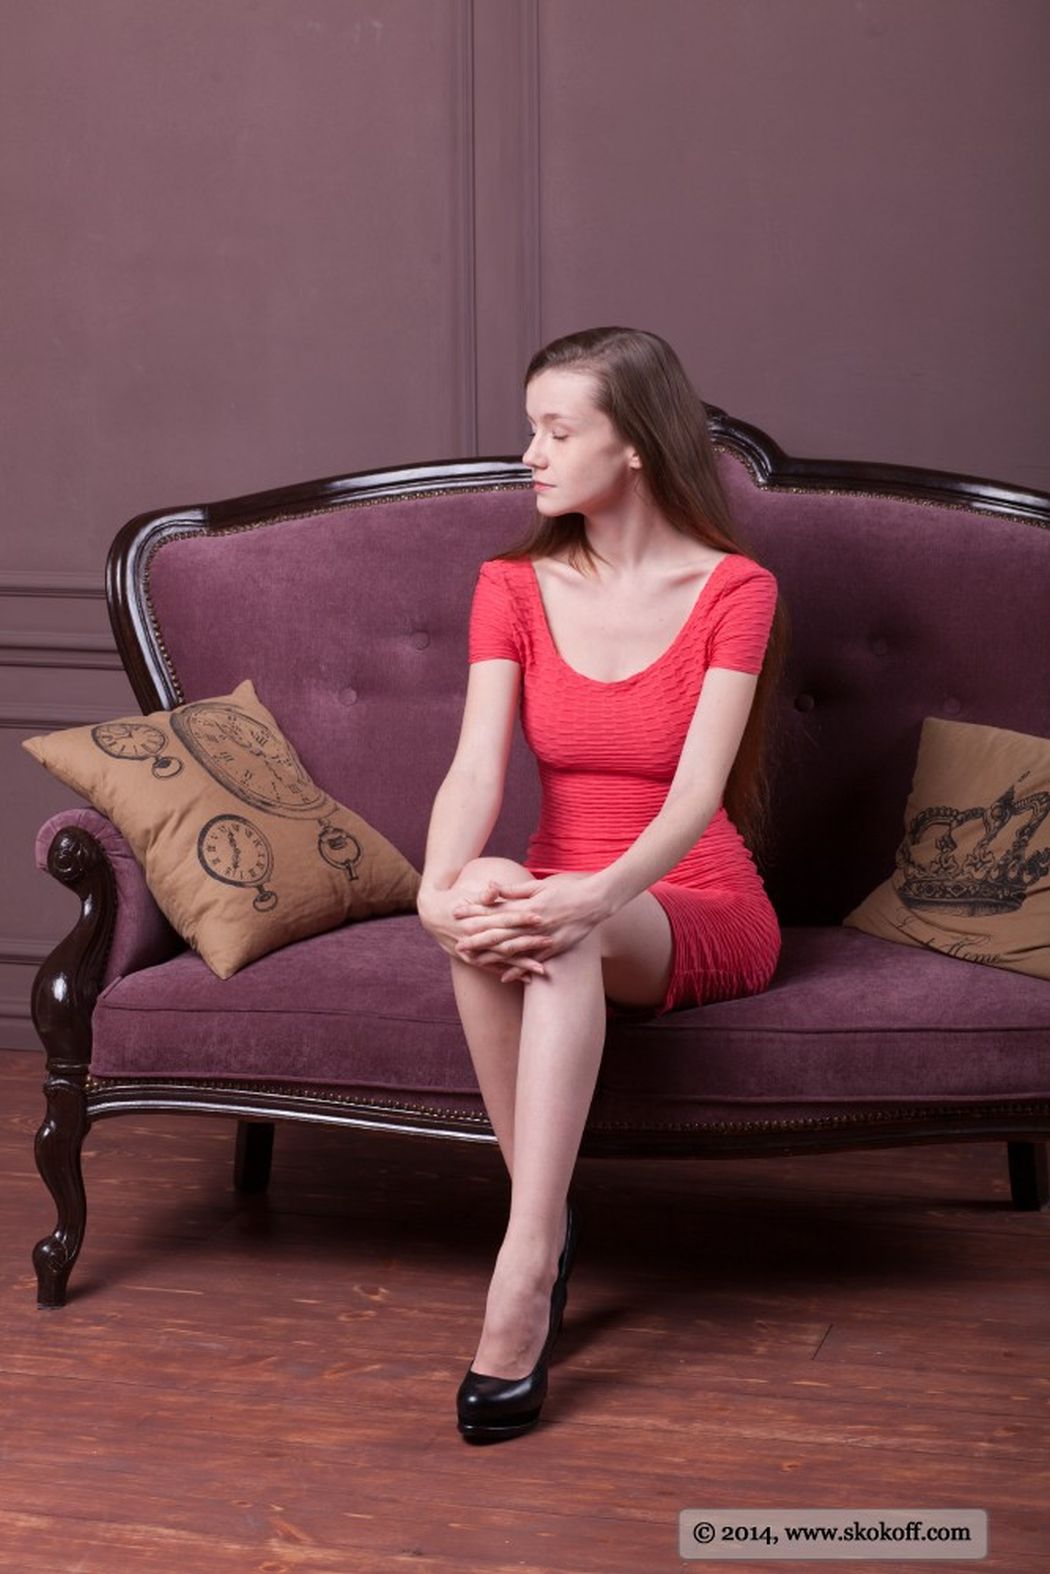 Emily Bloom, stijlvol en elegant, trekt haar strakke rode jurkje uit